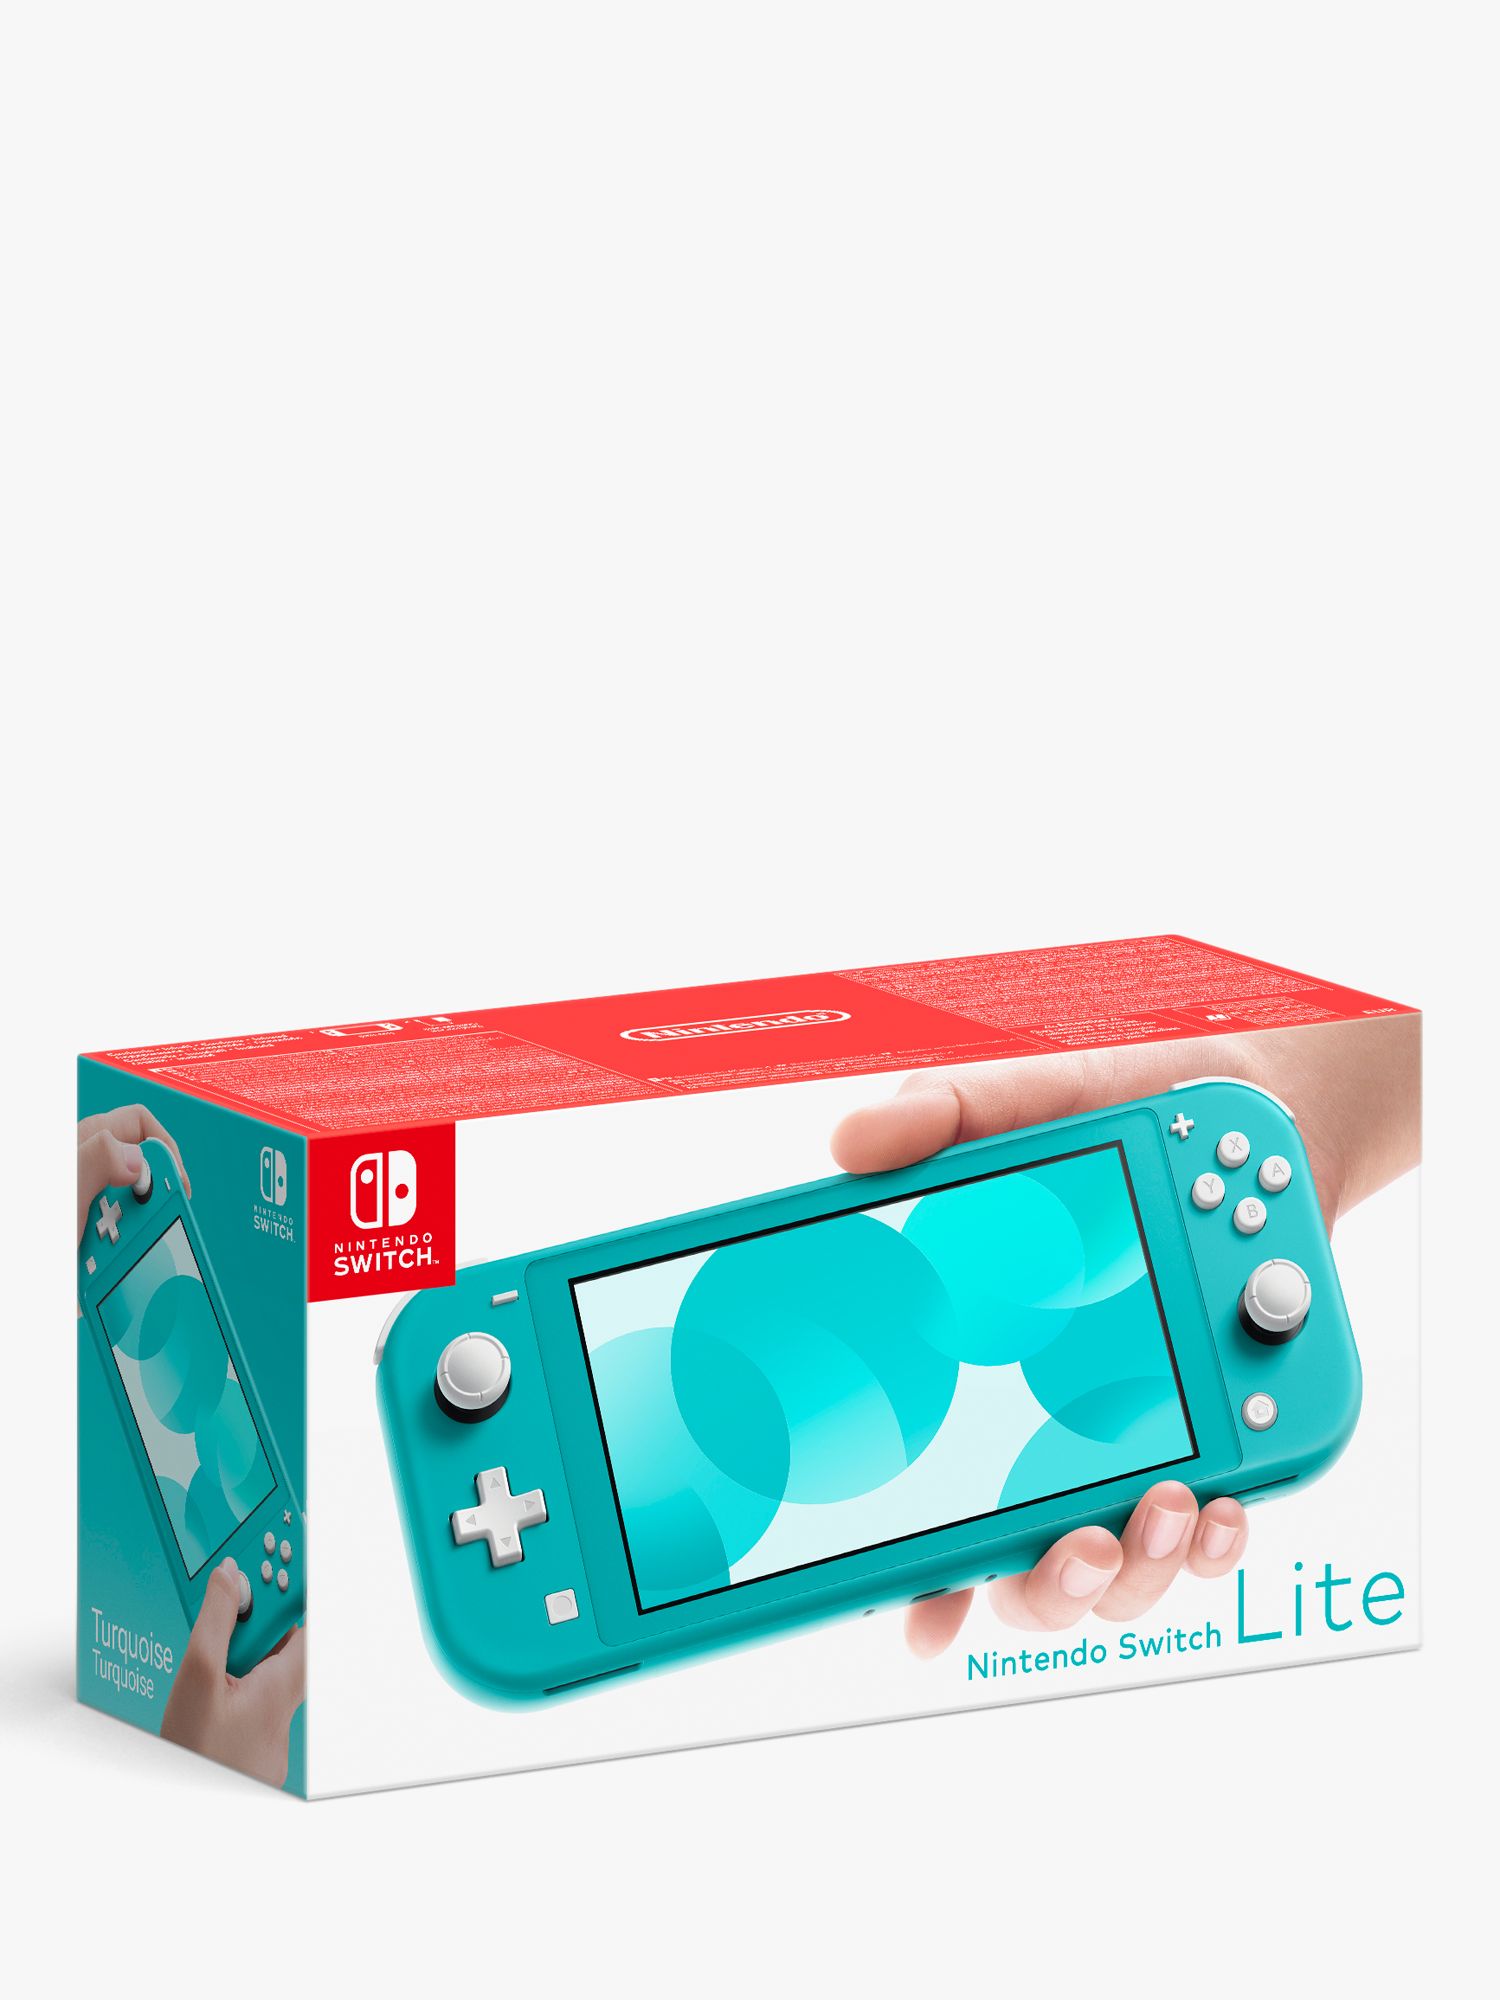 Switch lite グレー ターコイズ - Nintendo Switch